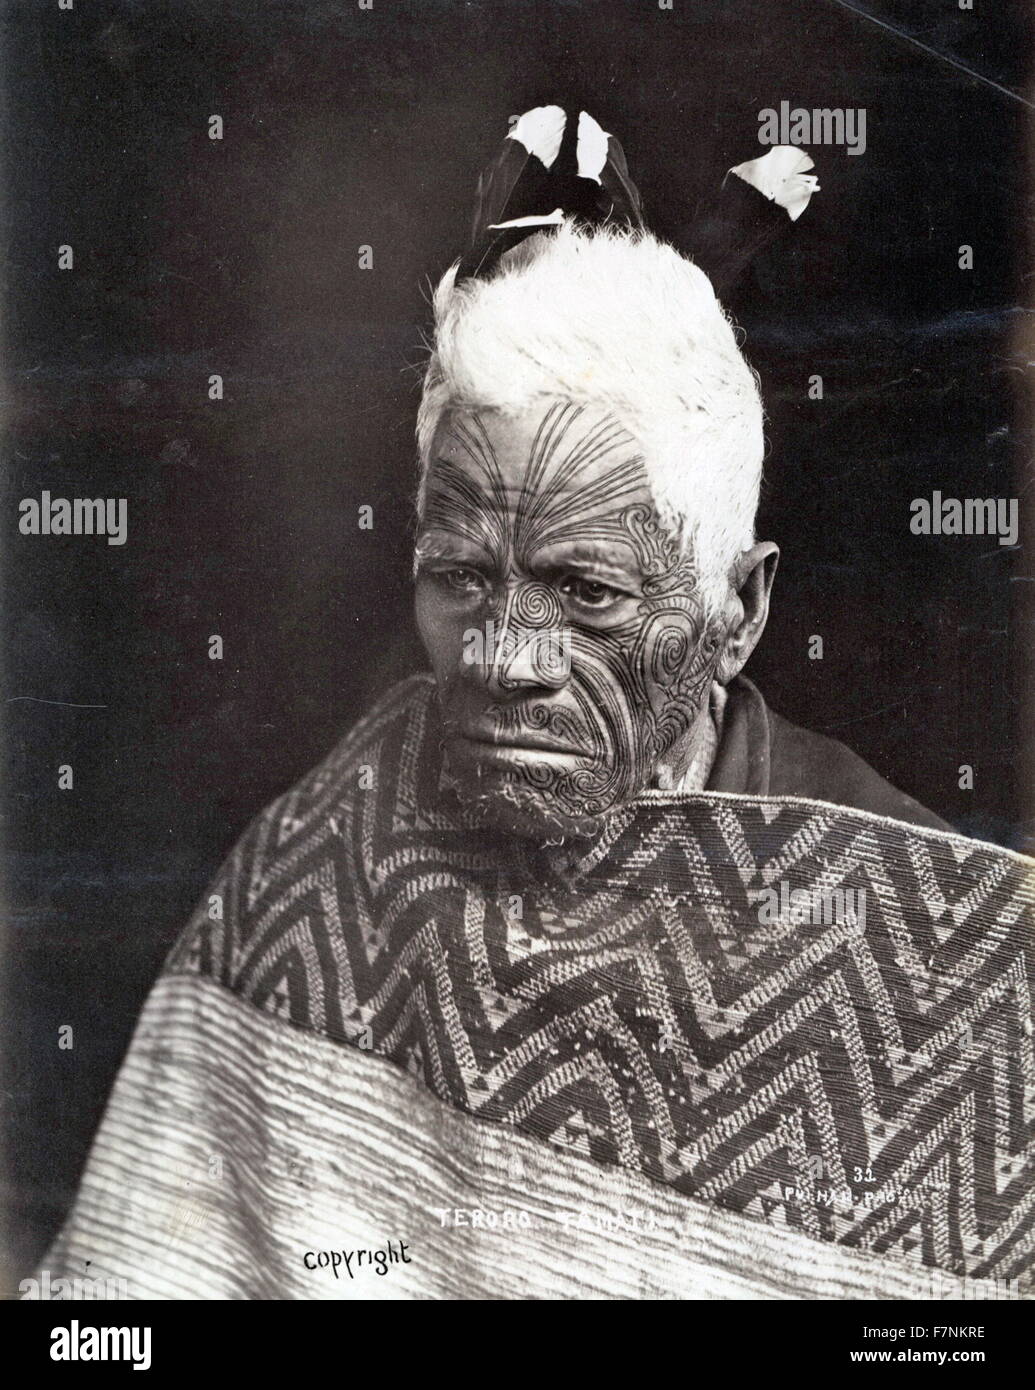 Teroro Tamati New Zealand Maori Chief With Facial Tattoos 10 Stock Photo Alamy